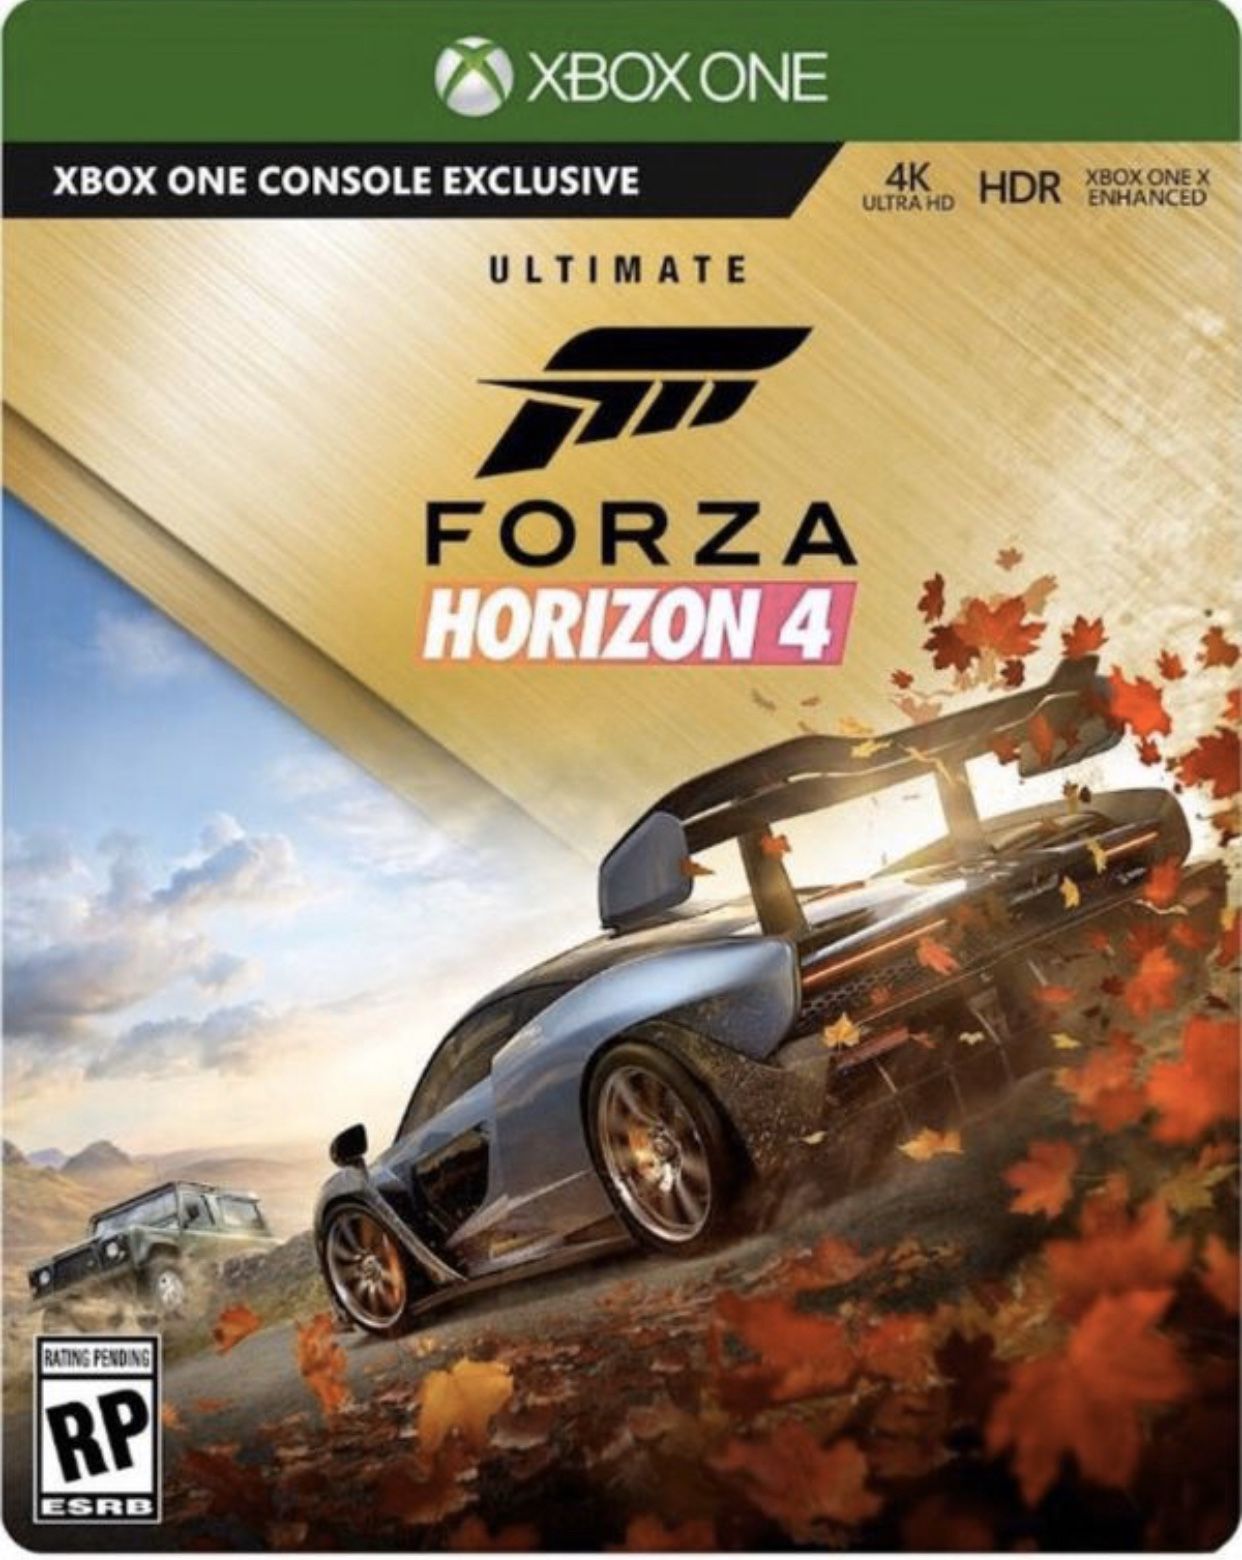 Forza Horizon 4 Cr $100 million in game Credits